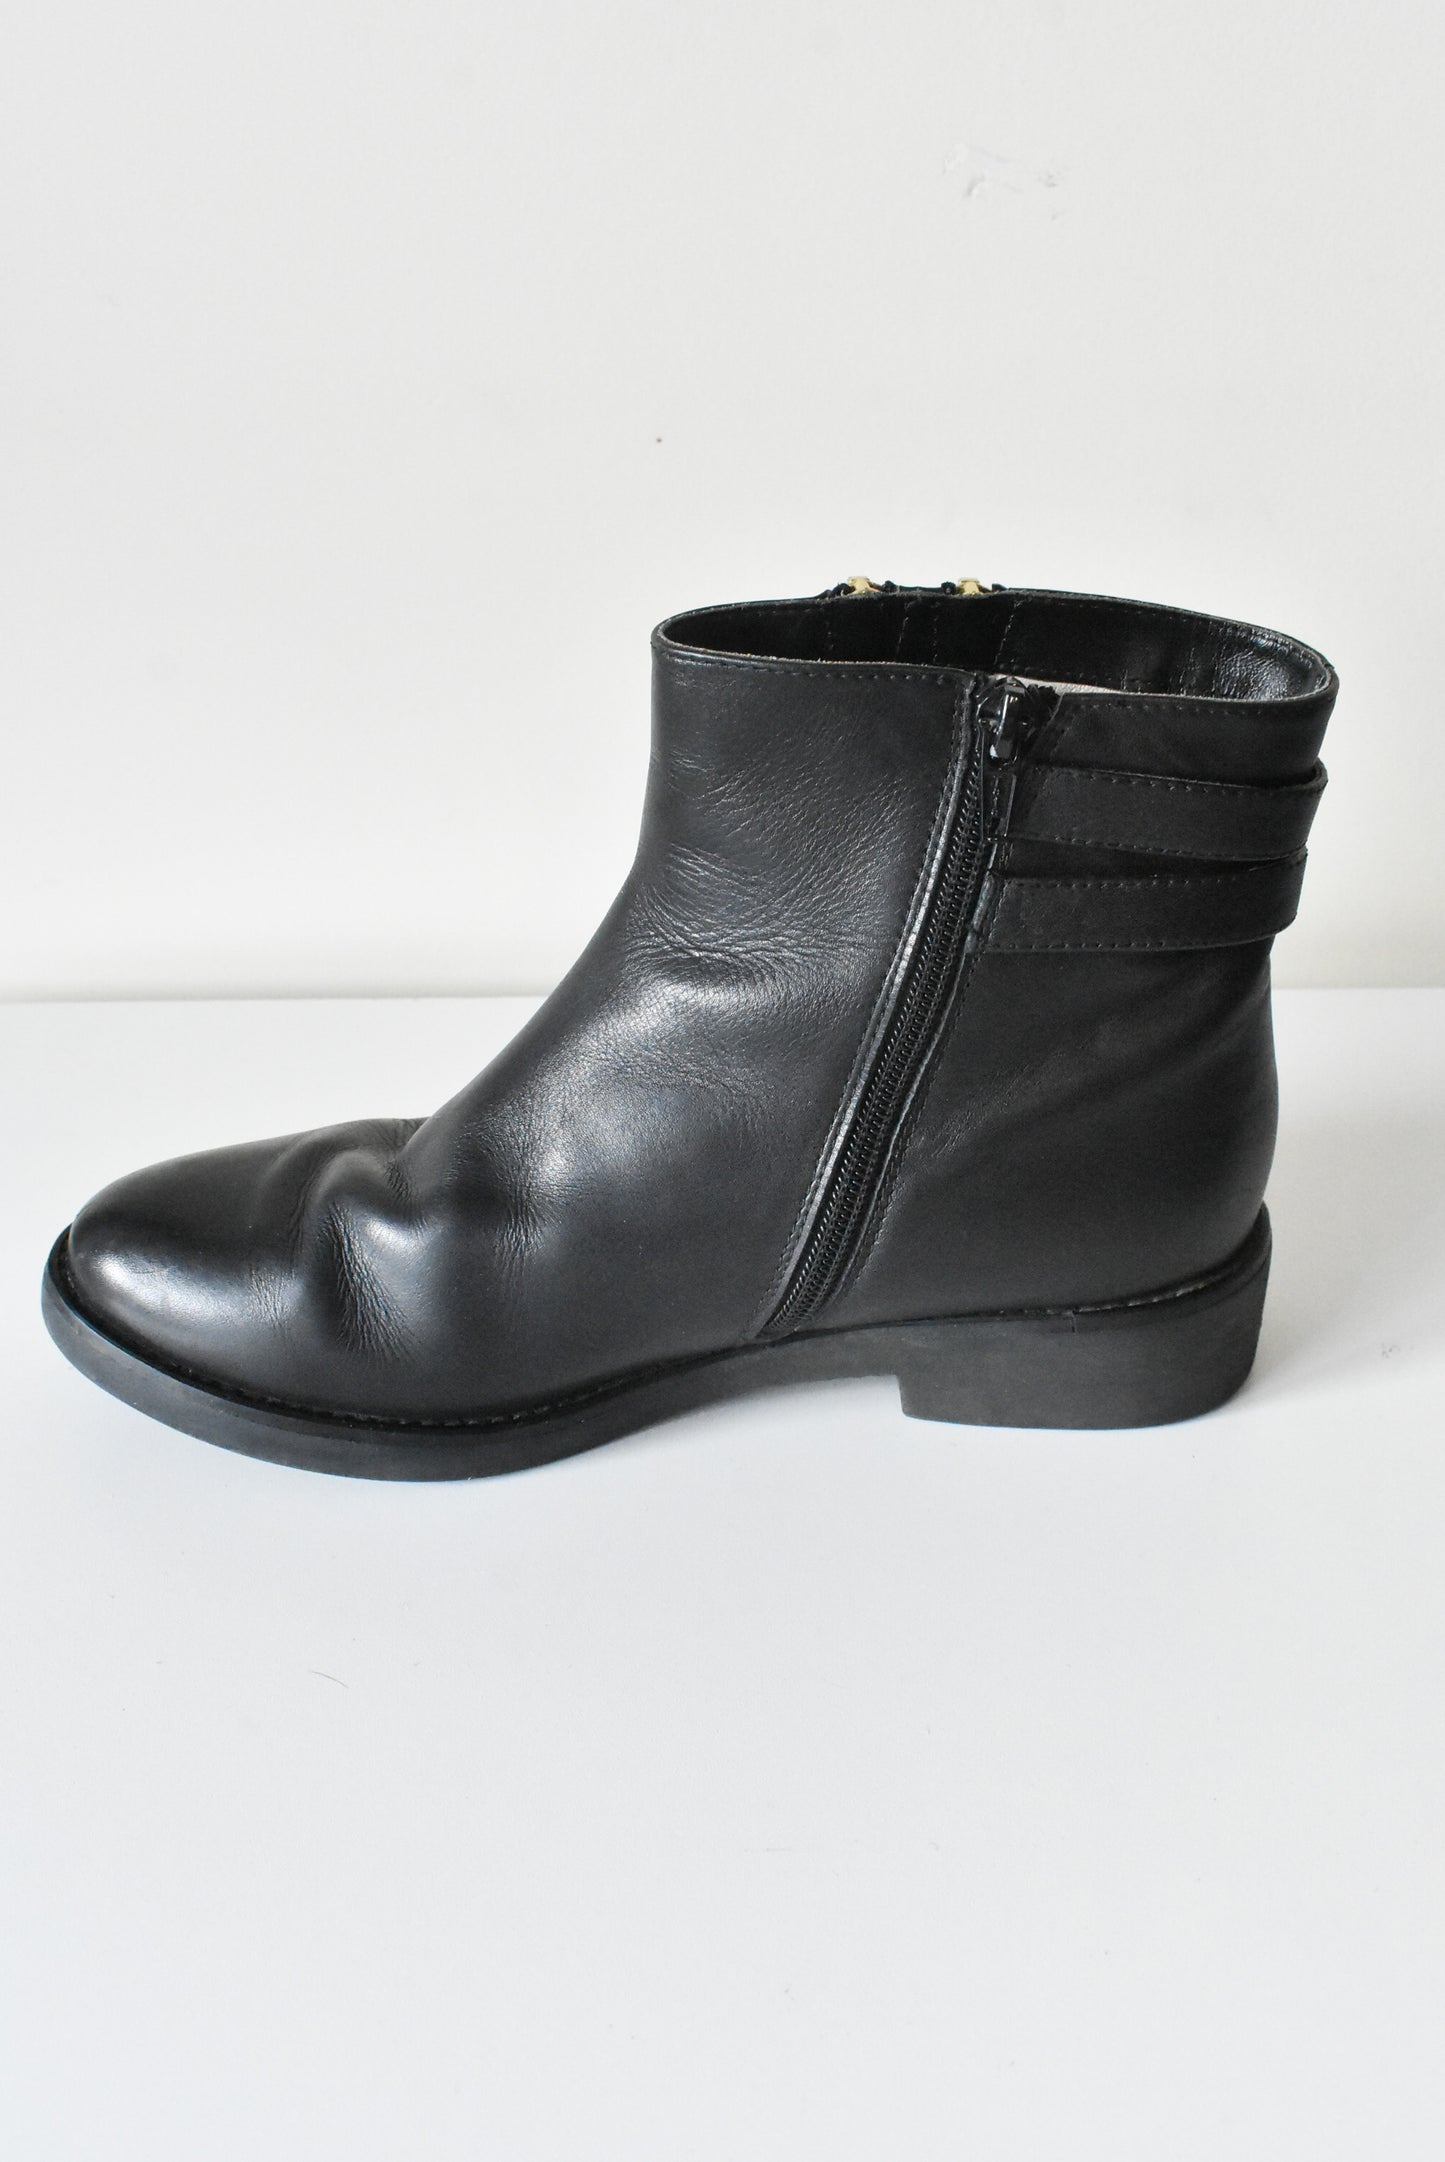 Tata zip and buckle boots, 235 (Korean size - NZ 4, EU 36)